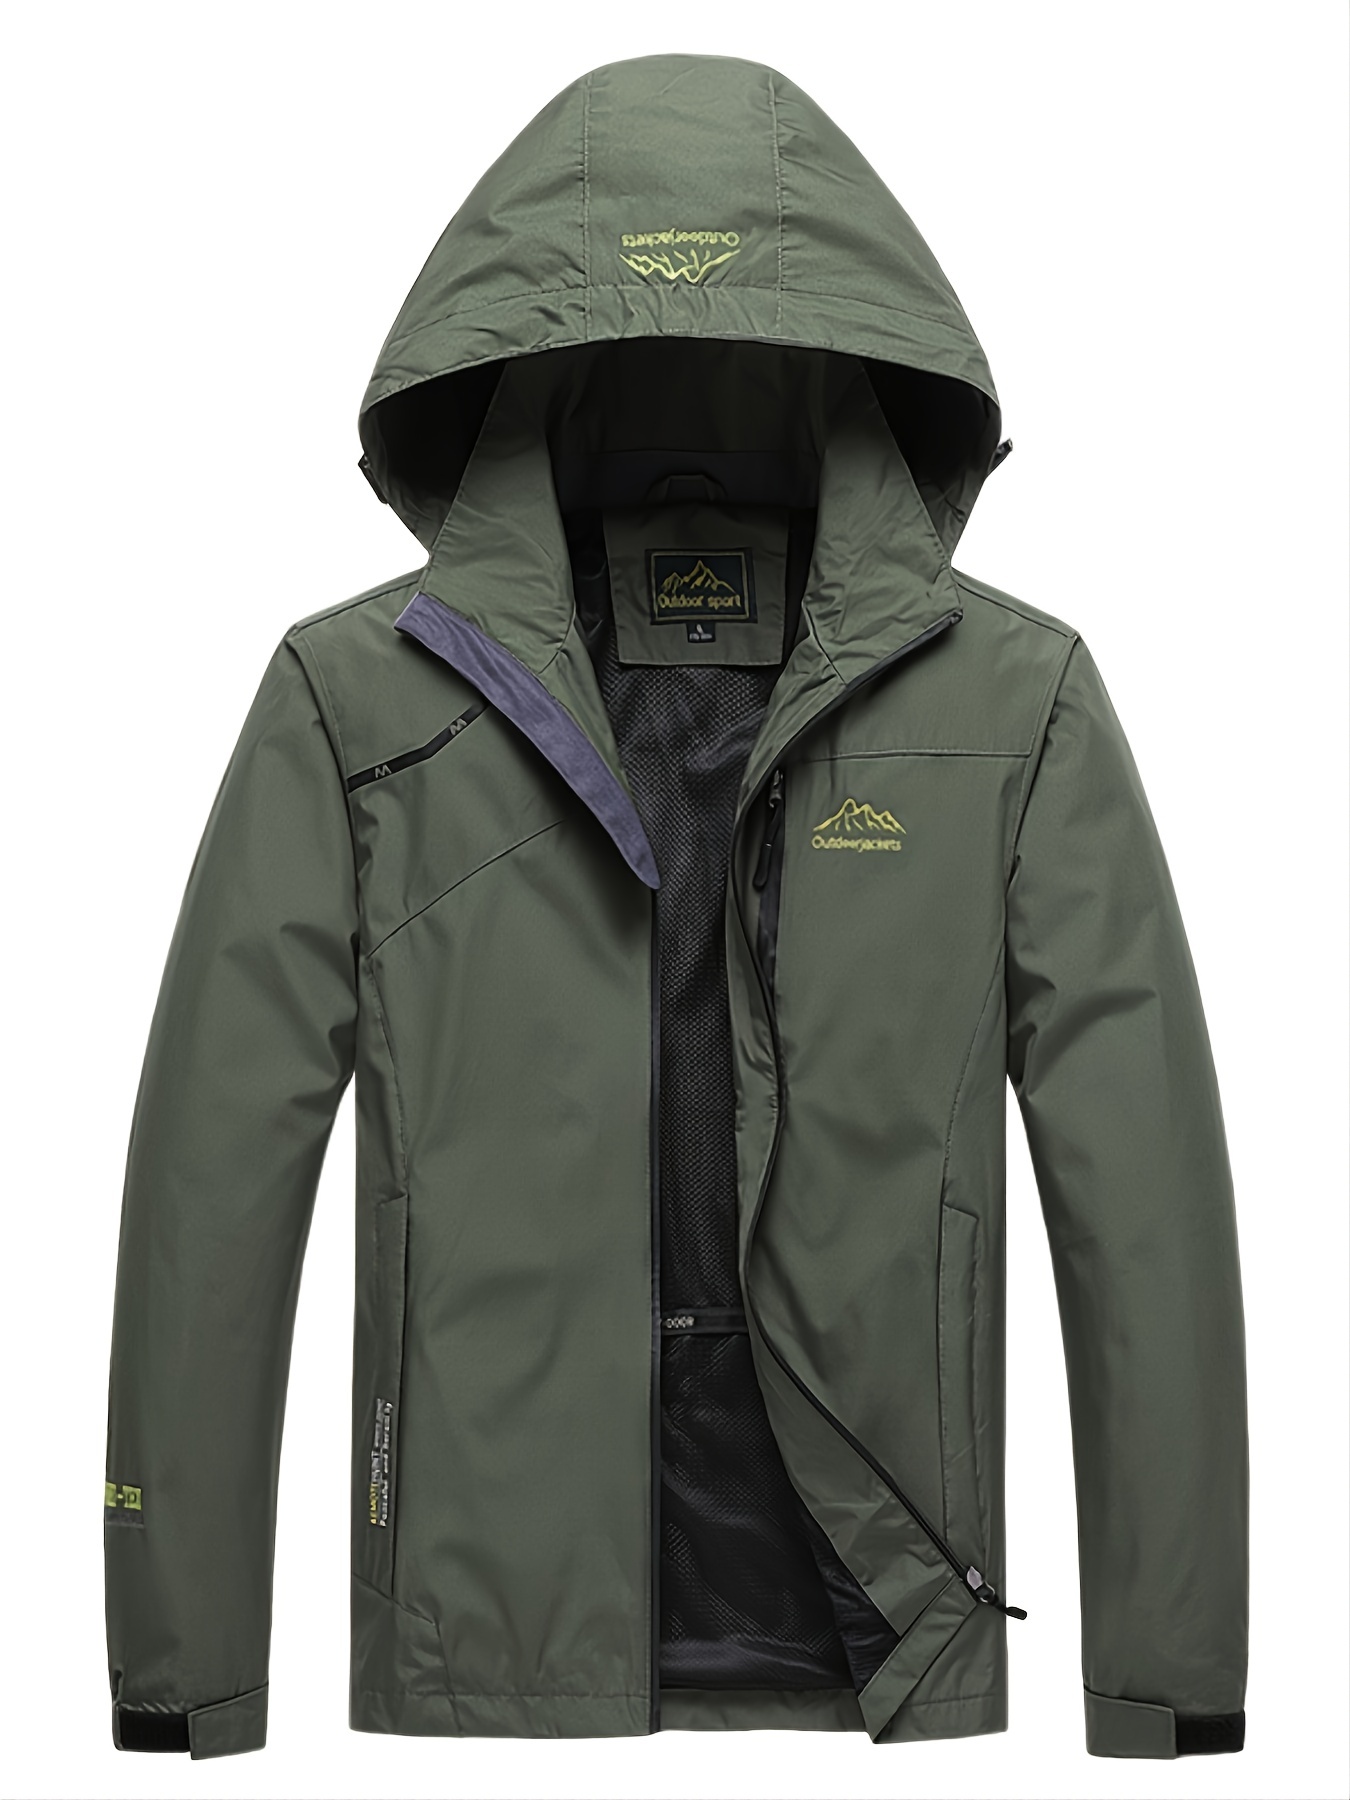 mens waterproof rain jacket lightweight raincoat windbreaker with hood for hiking travel outdoor